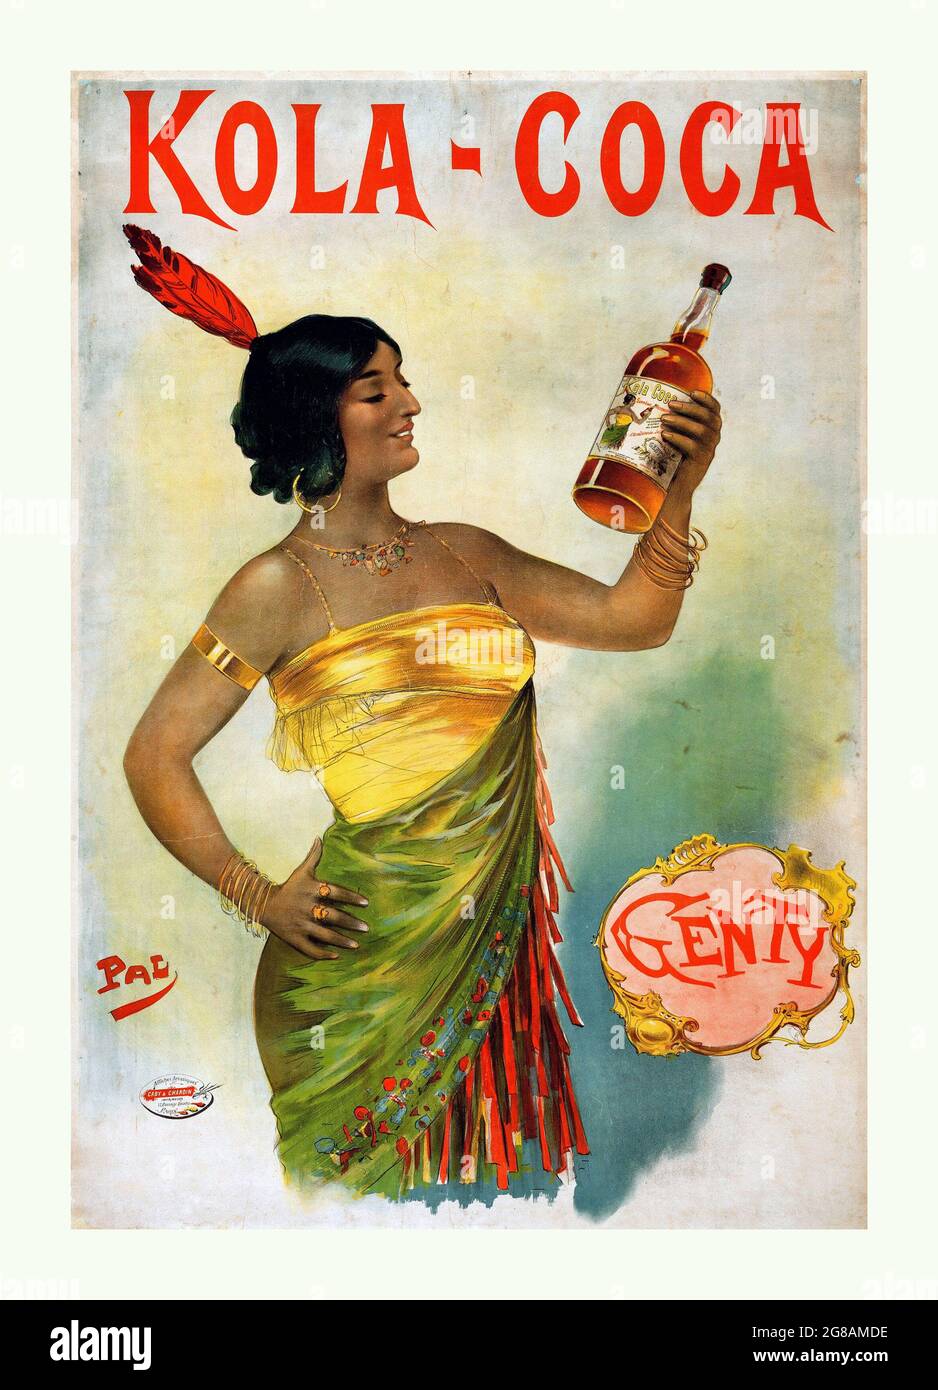 Vintage advertisement for alcohol. Kola-Coca GENTY (c. 1897). French Advertising Poster – Jean de Paleologu artwork – PAL Stock Photo